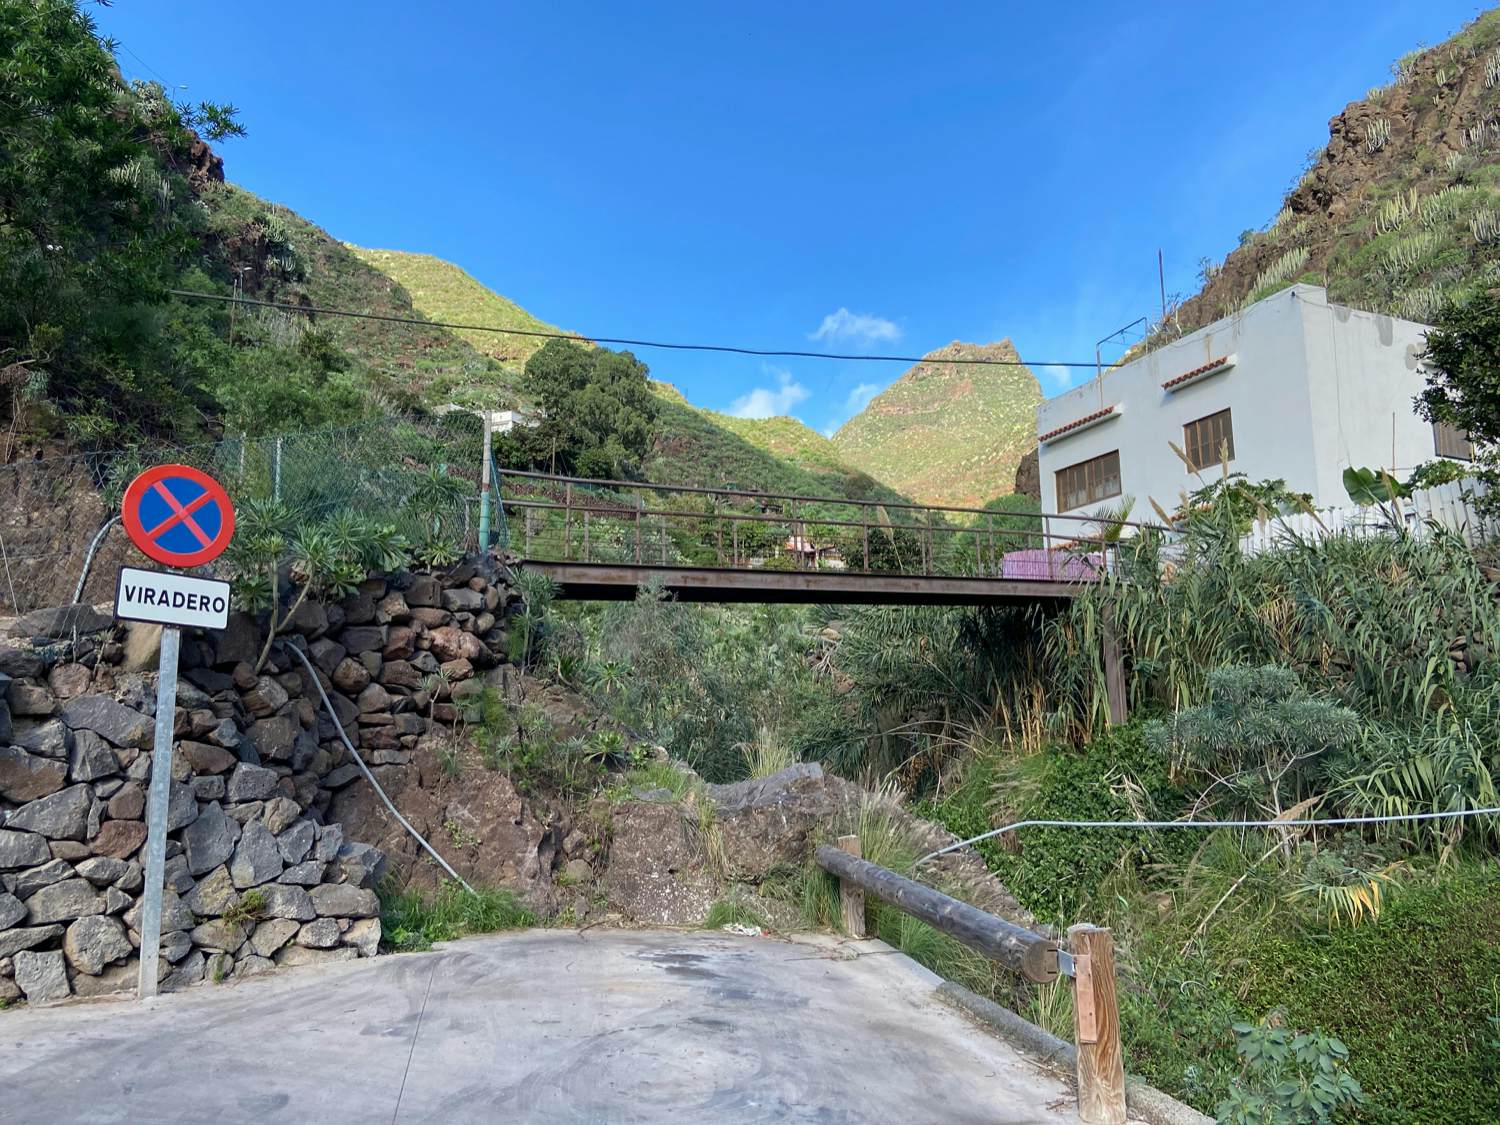 Hiking trail turns into a road at Las Cuevas